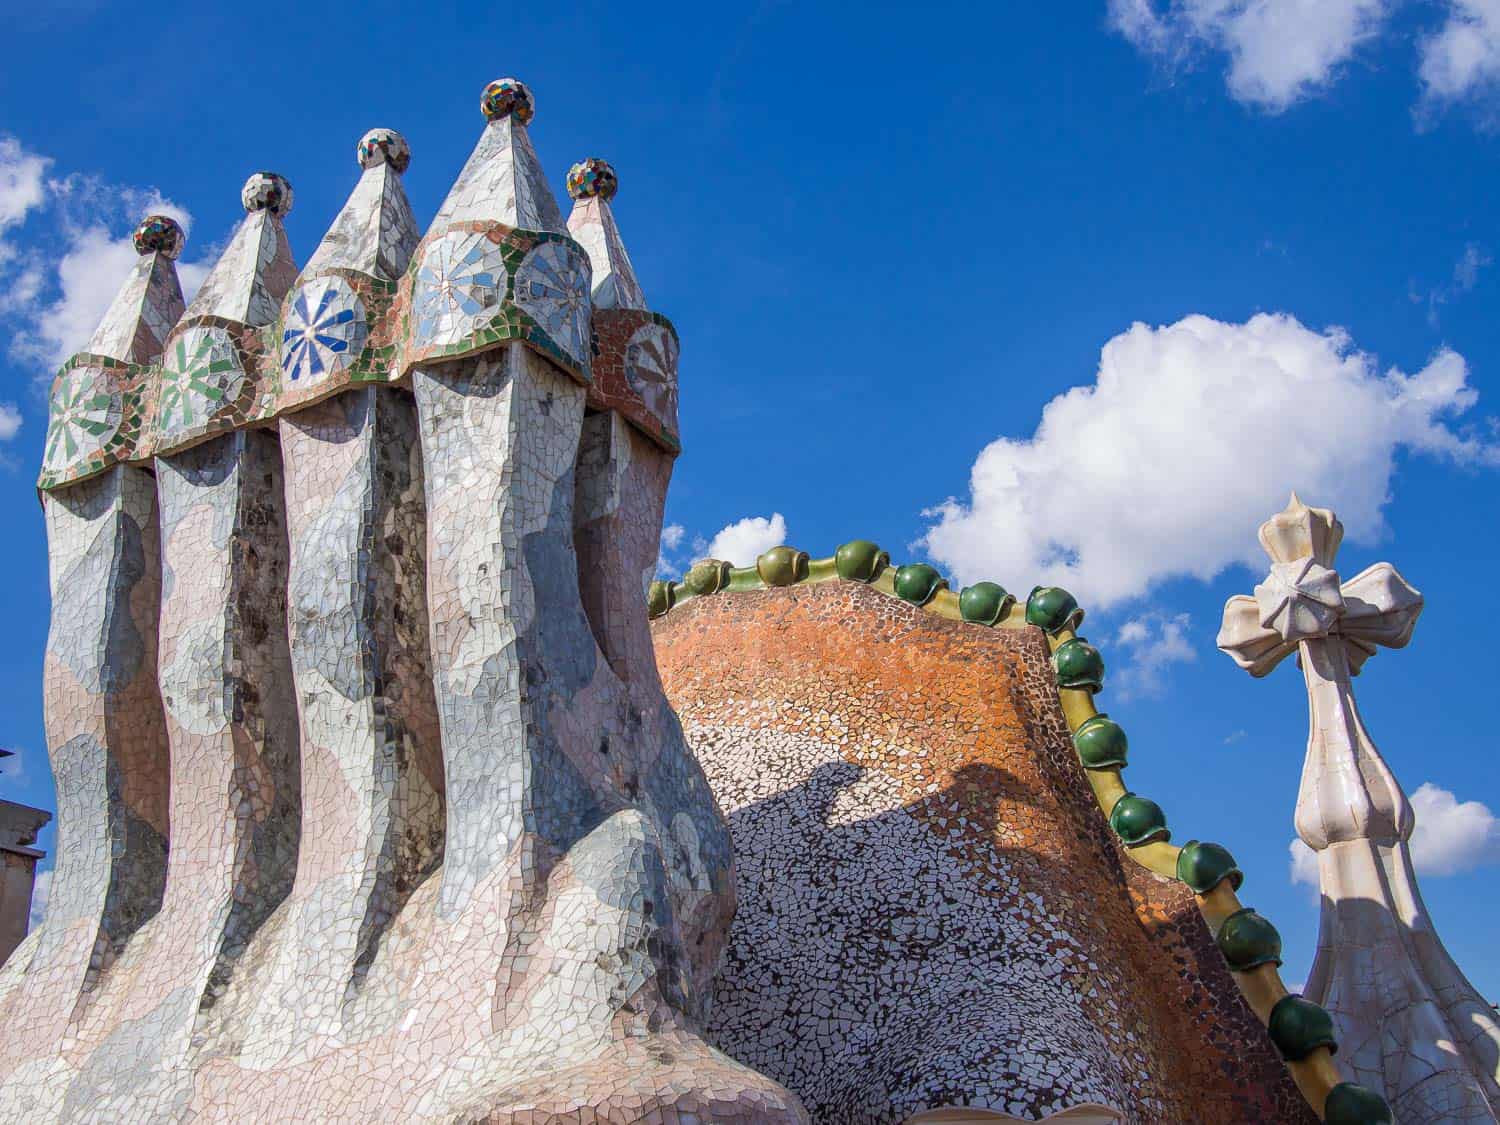 Casa Batllo chimneys on the Gaudi in Context walk in Barcelona